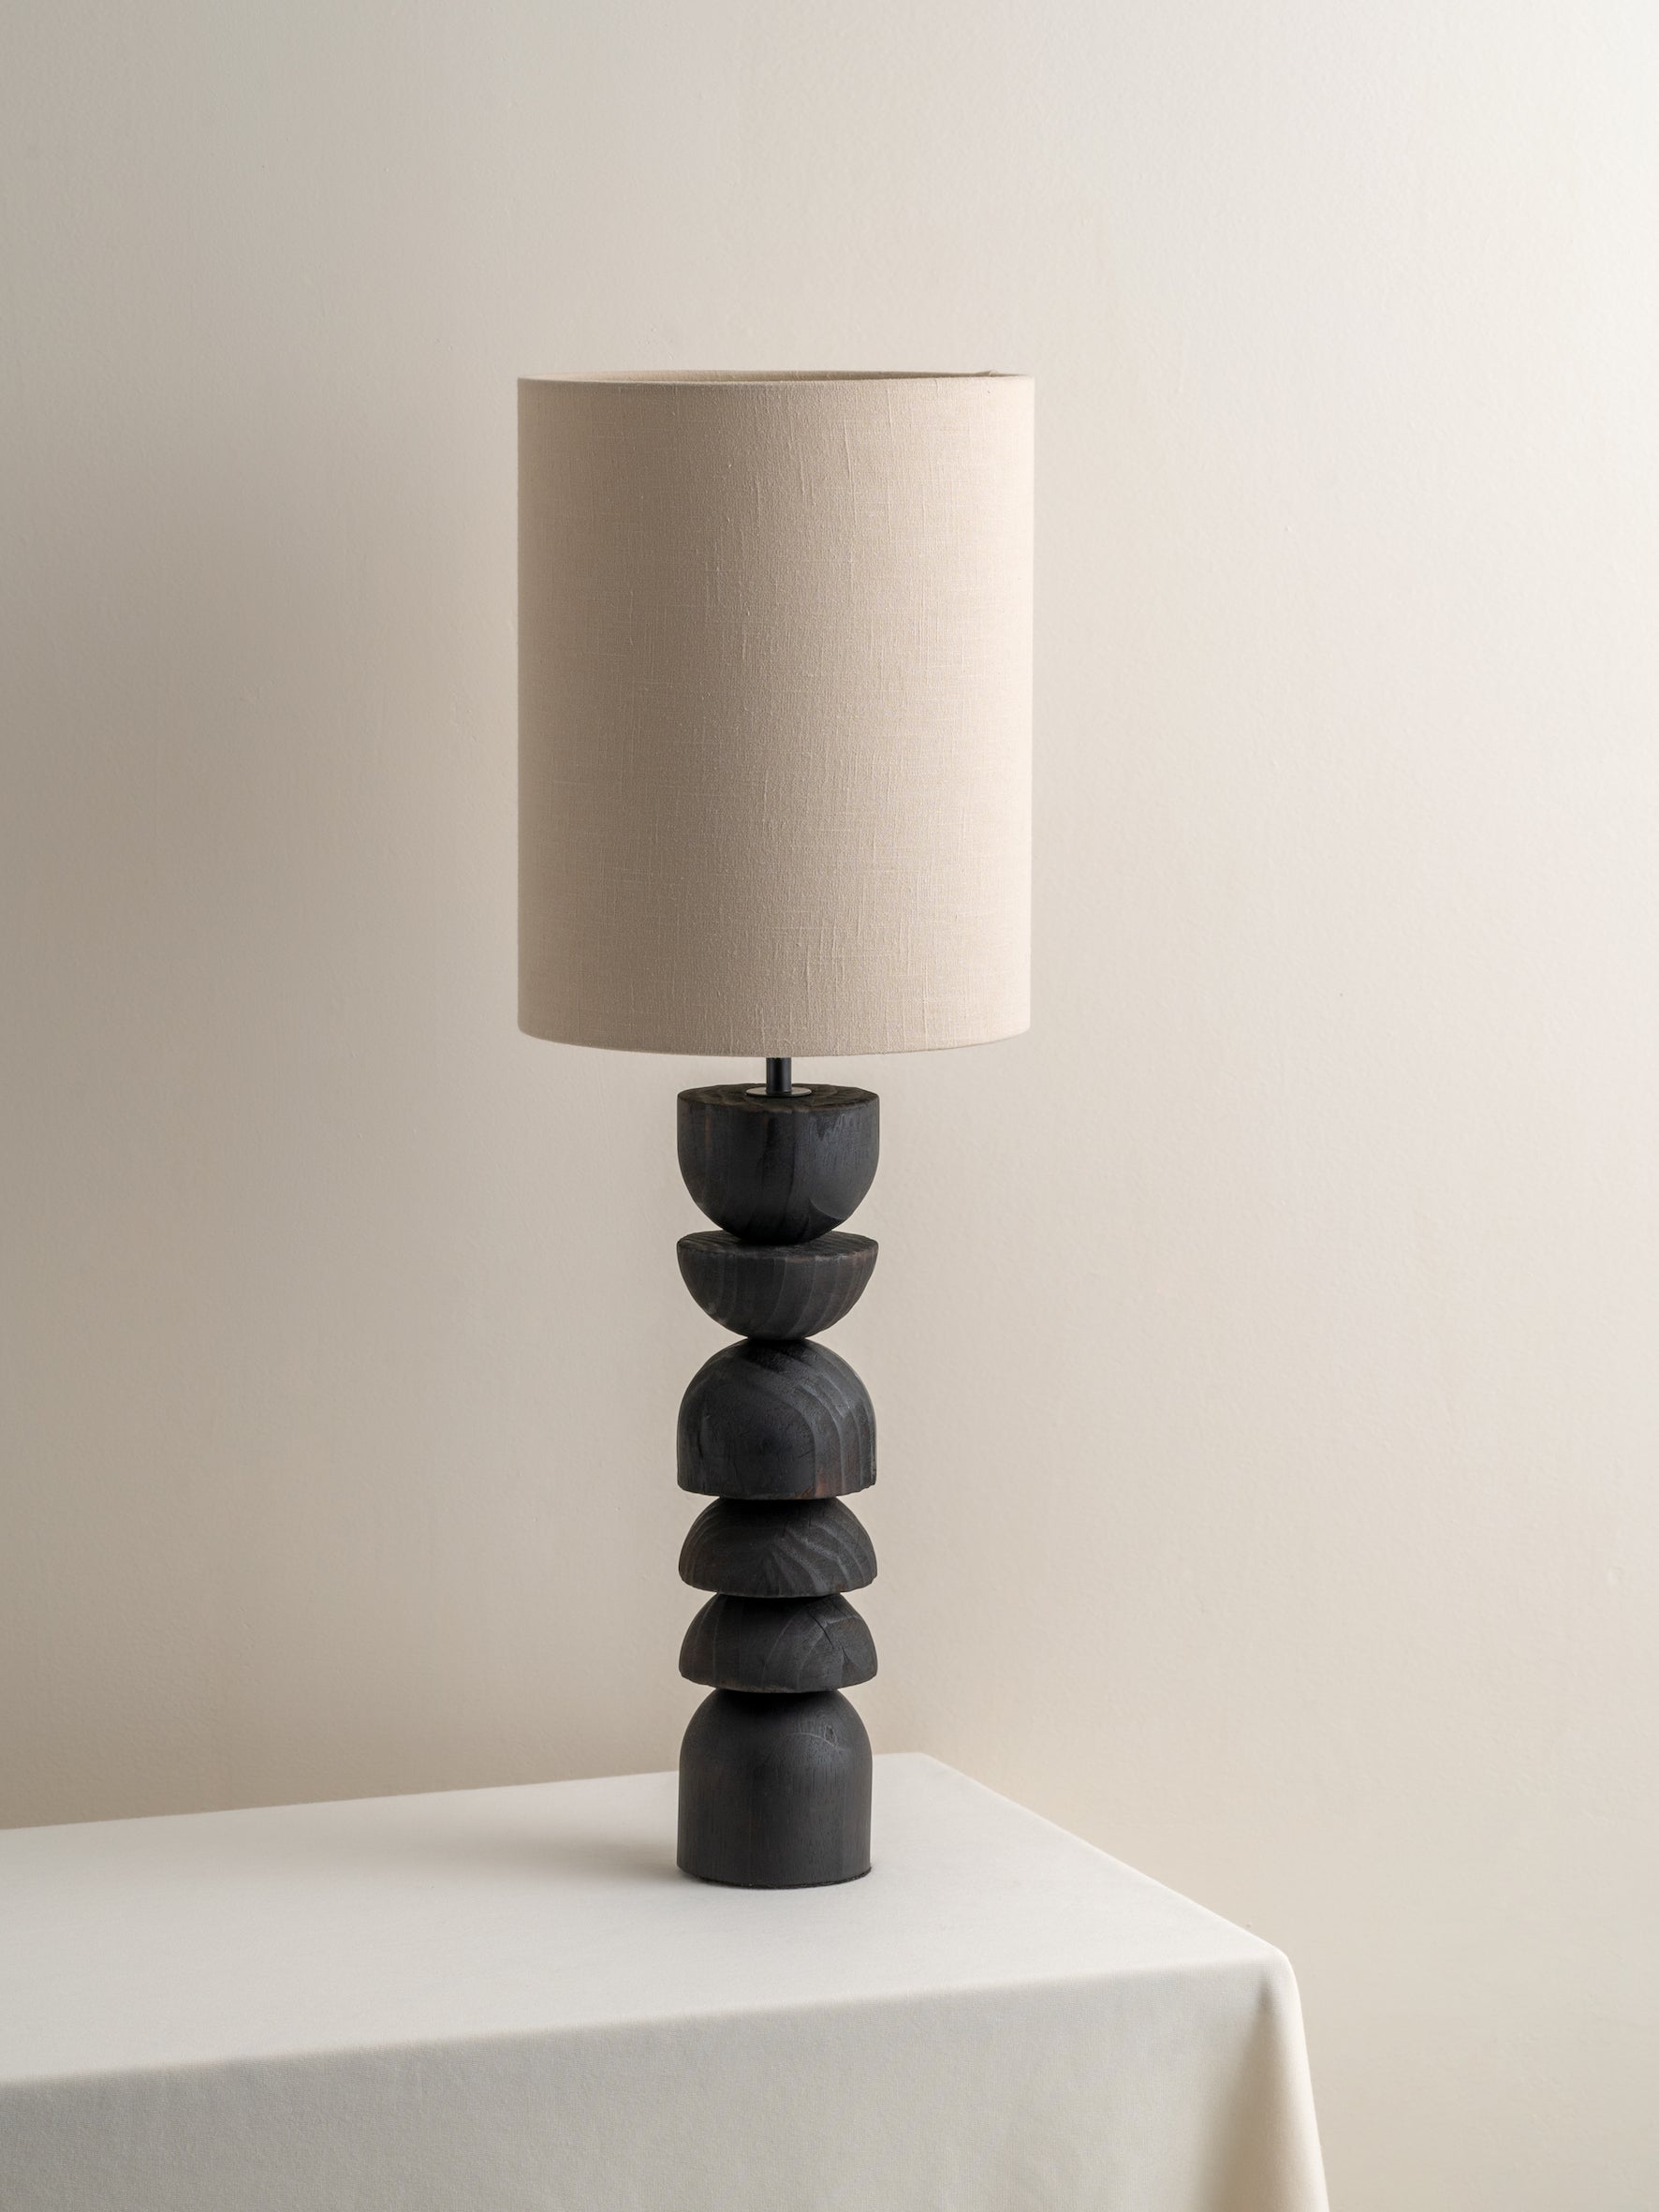 Aska - tall charred wood and natural linen table lamp | Table Lamp | Lights & Lamps | UK | Modern Affordable Designer Lighting